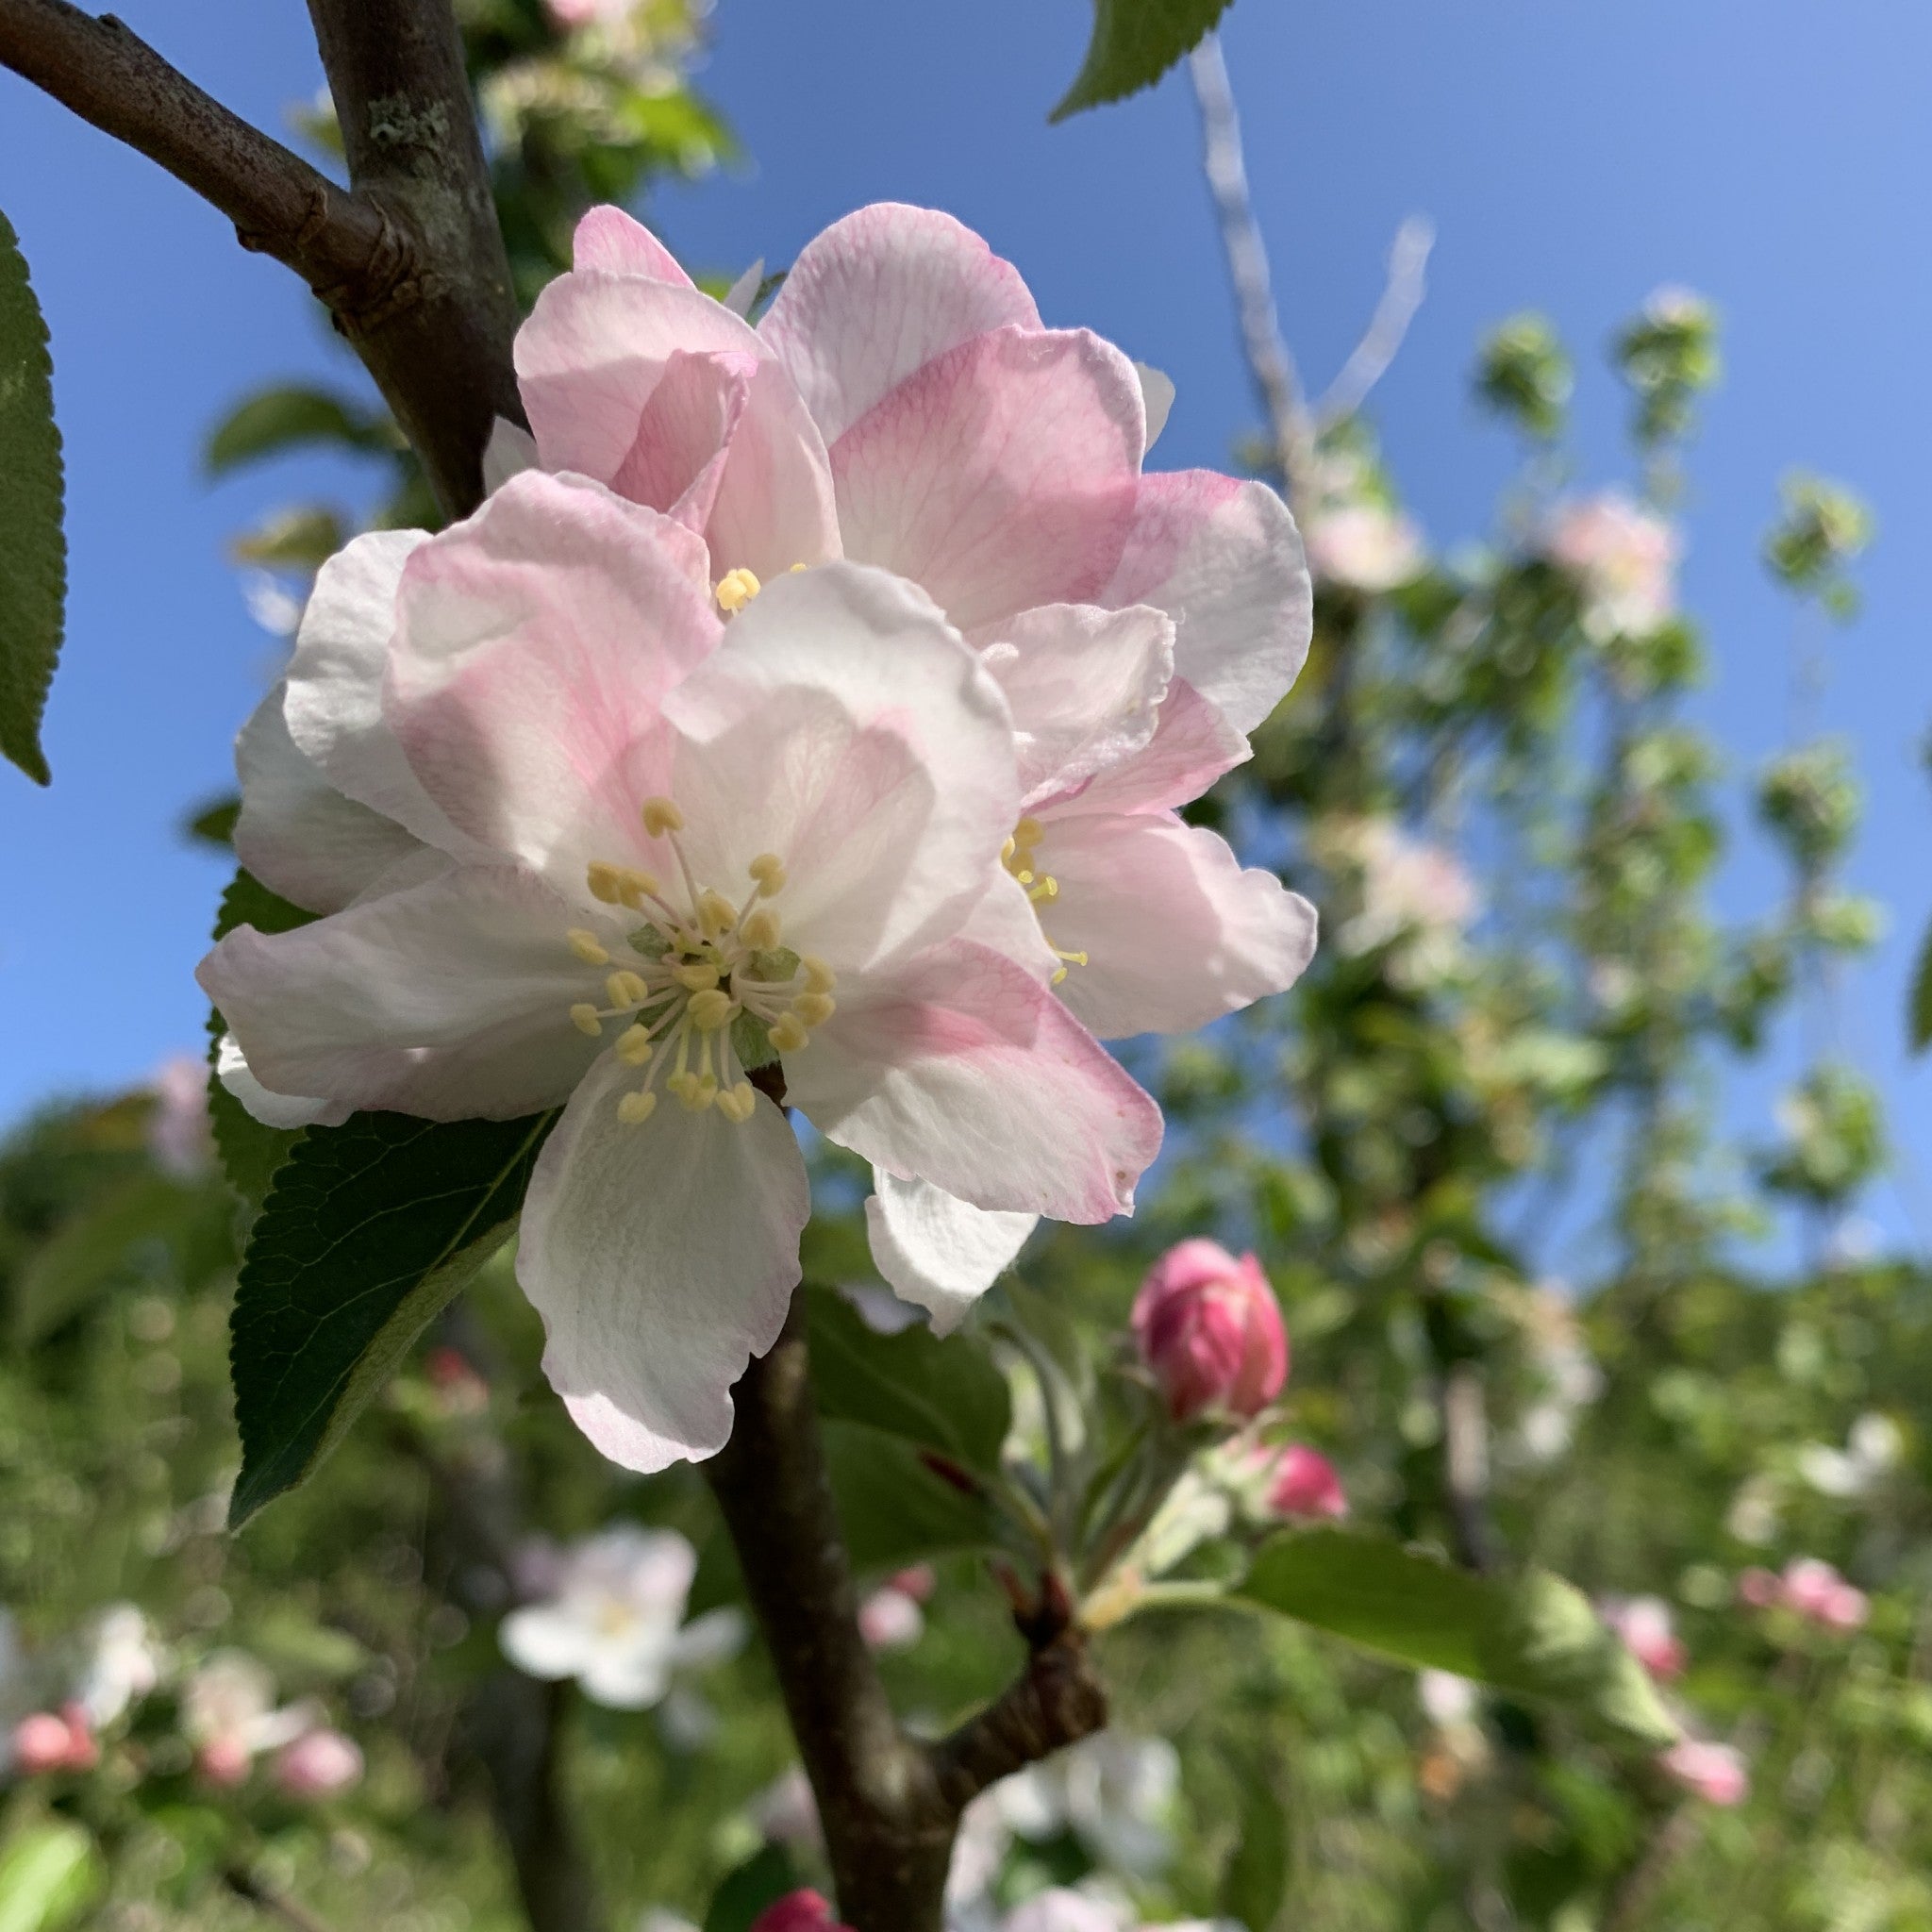 Cadwalader apple tree blossom